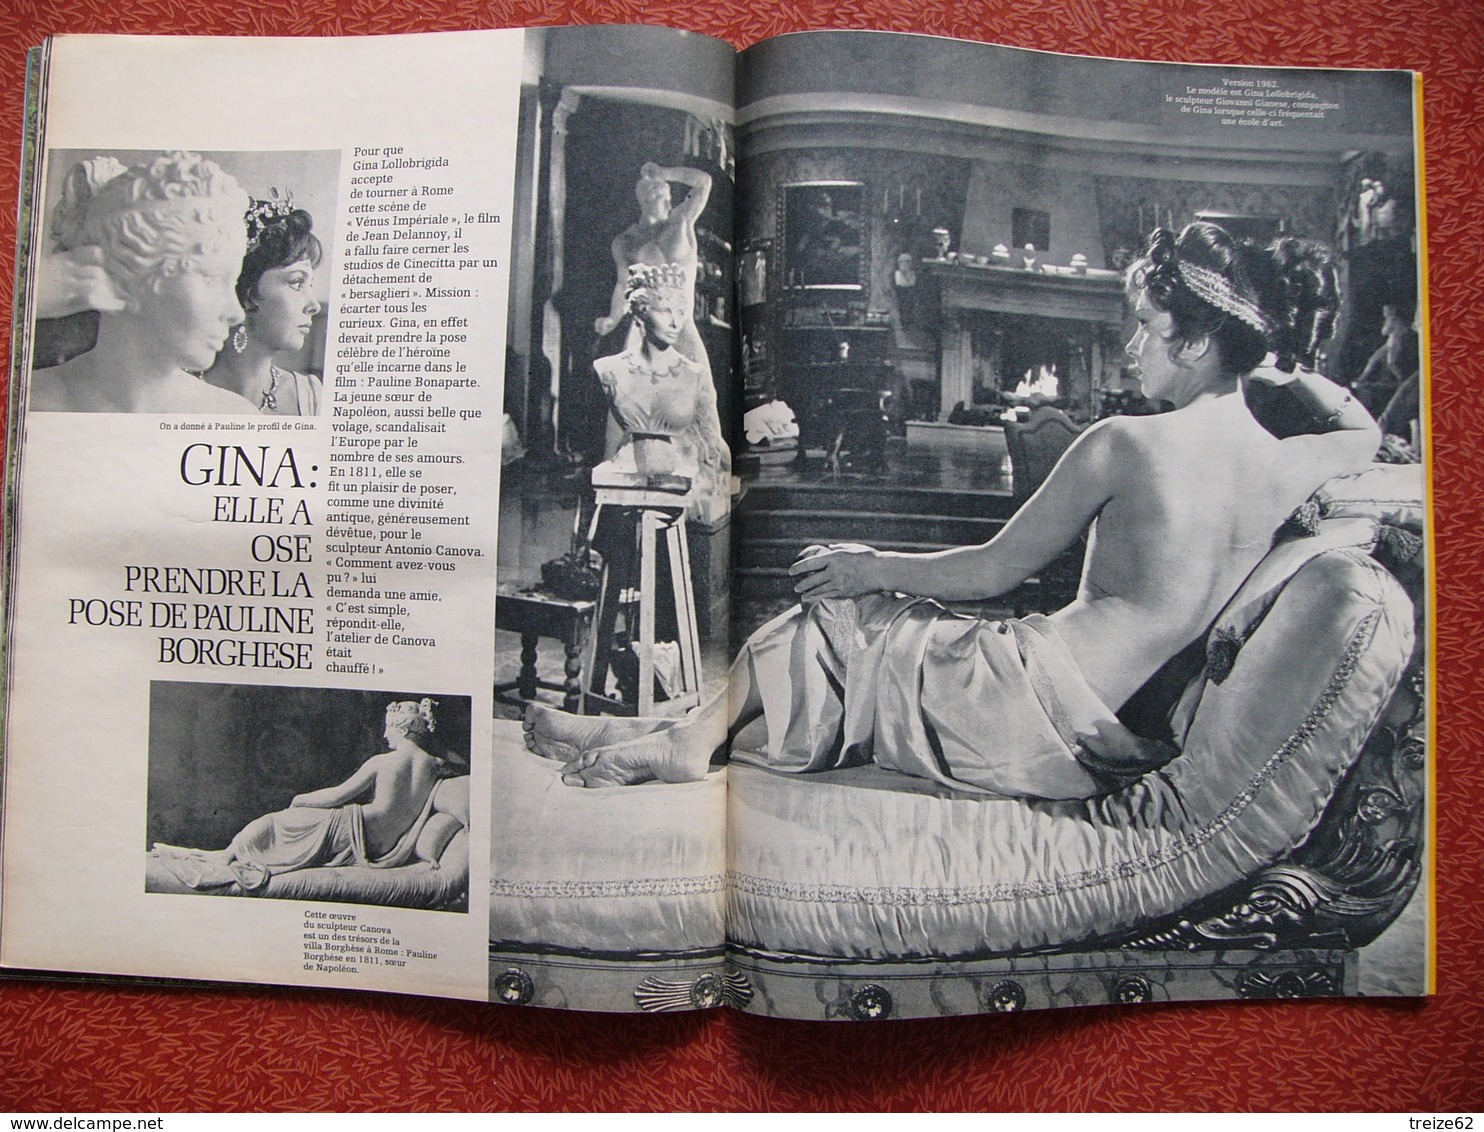 La 1ère couverture de Johnny Hallyday Paris Match Kertlag Pleumeur Bodou Gina Lolobrigida Caroline de Monaco 1962